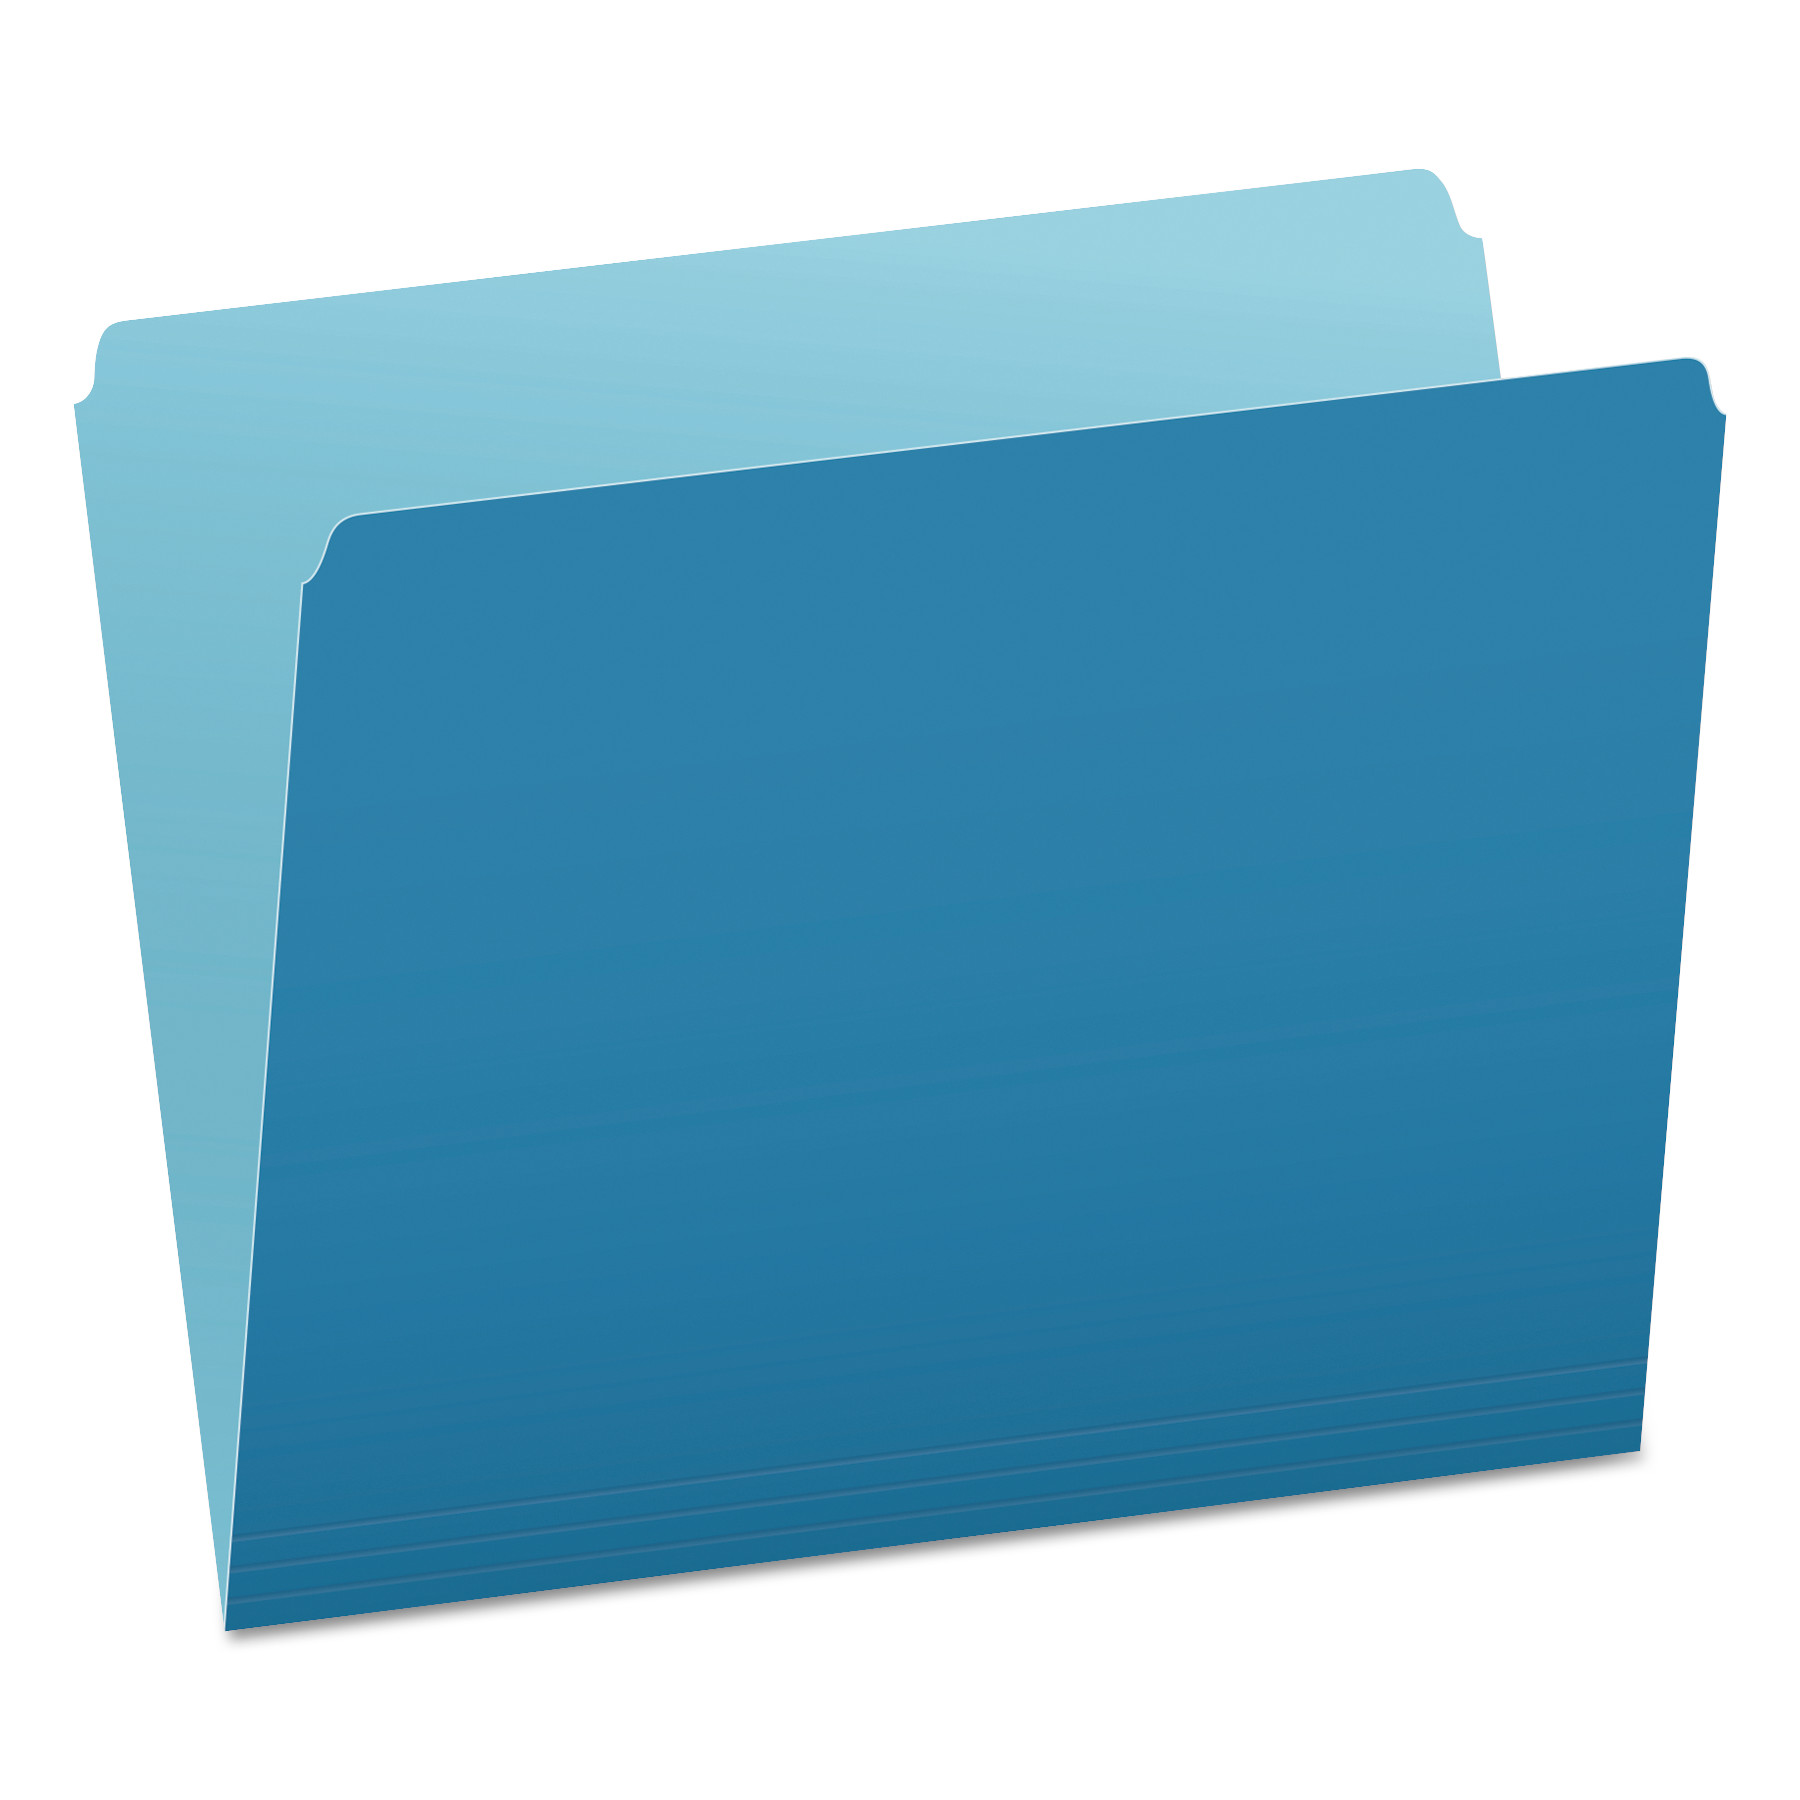  Pendaflex 152 BLU Colored File Folders, Straight Tab, Letter Size, Blue/Light Blue, 100/Box (PFX152BLU) 